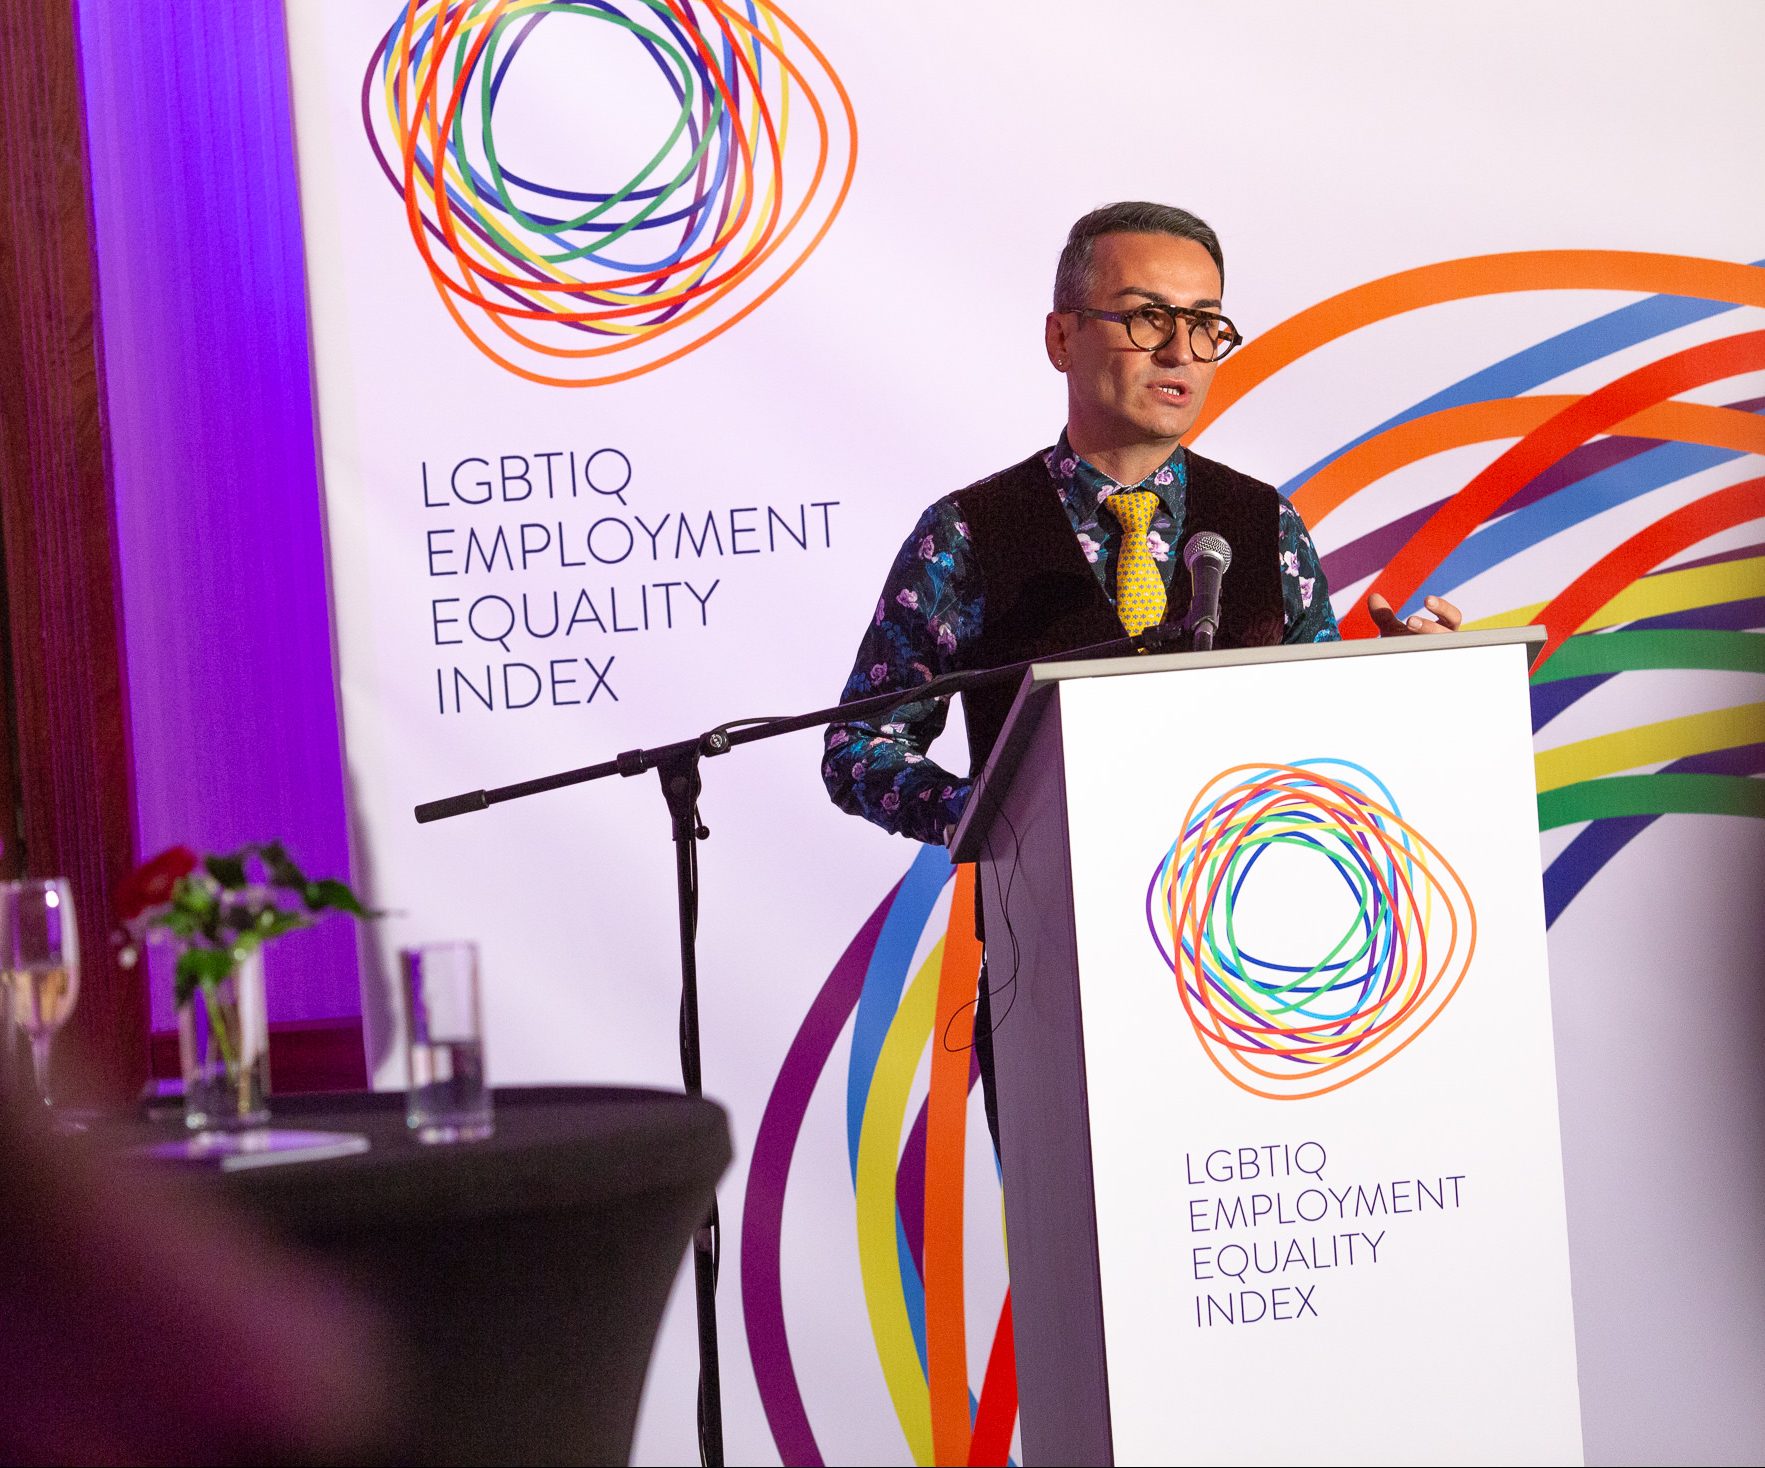 Elton ILIRJANI Statement – The LGBT IQ Employment Equality Index